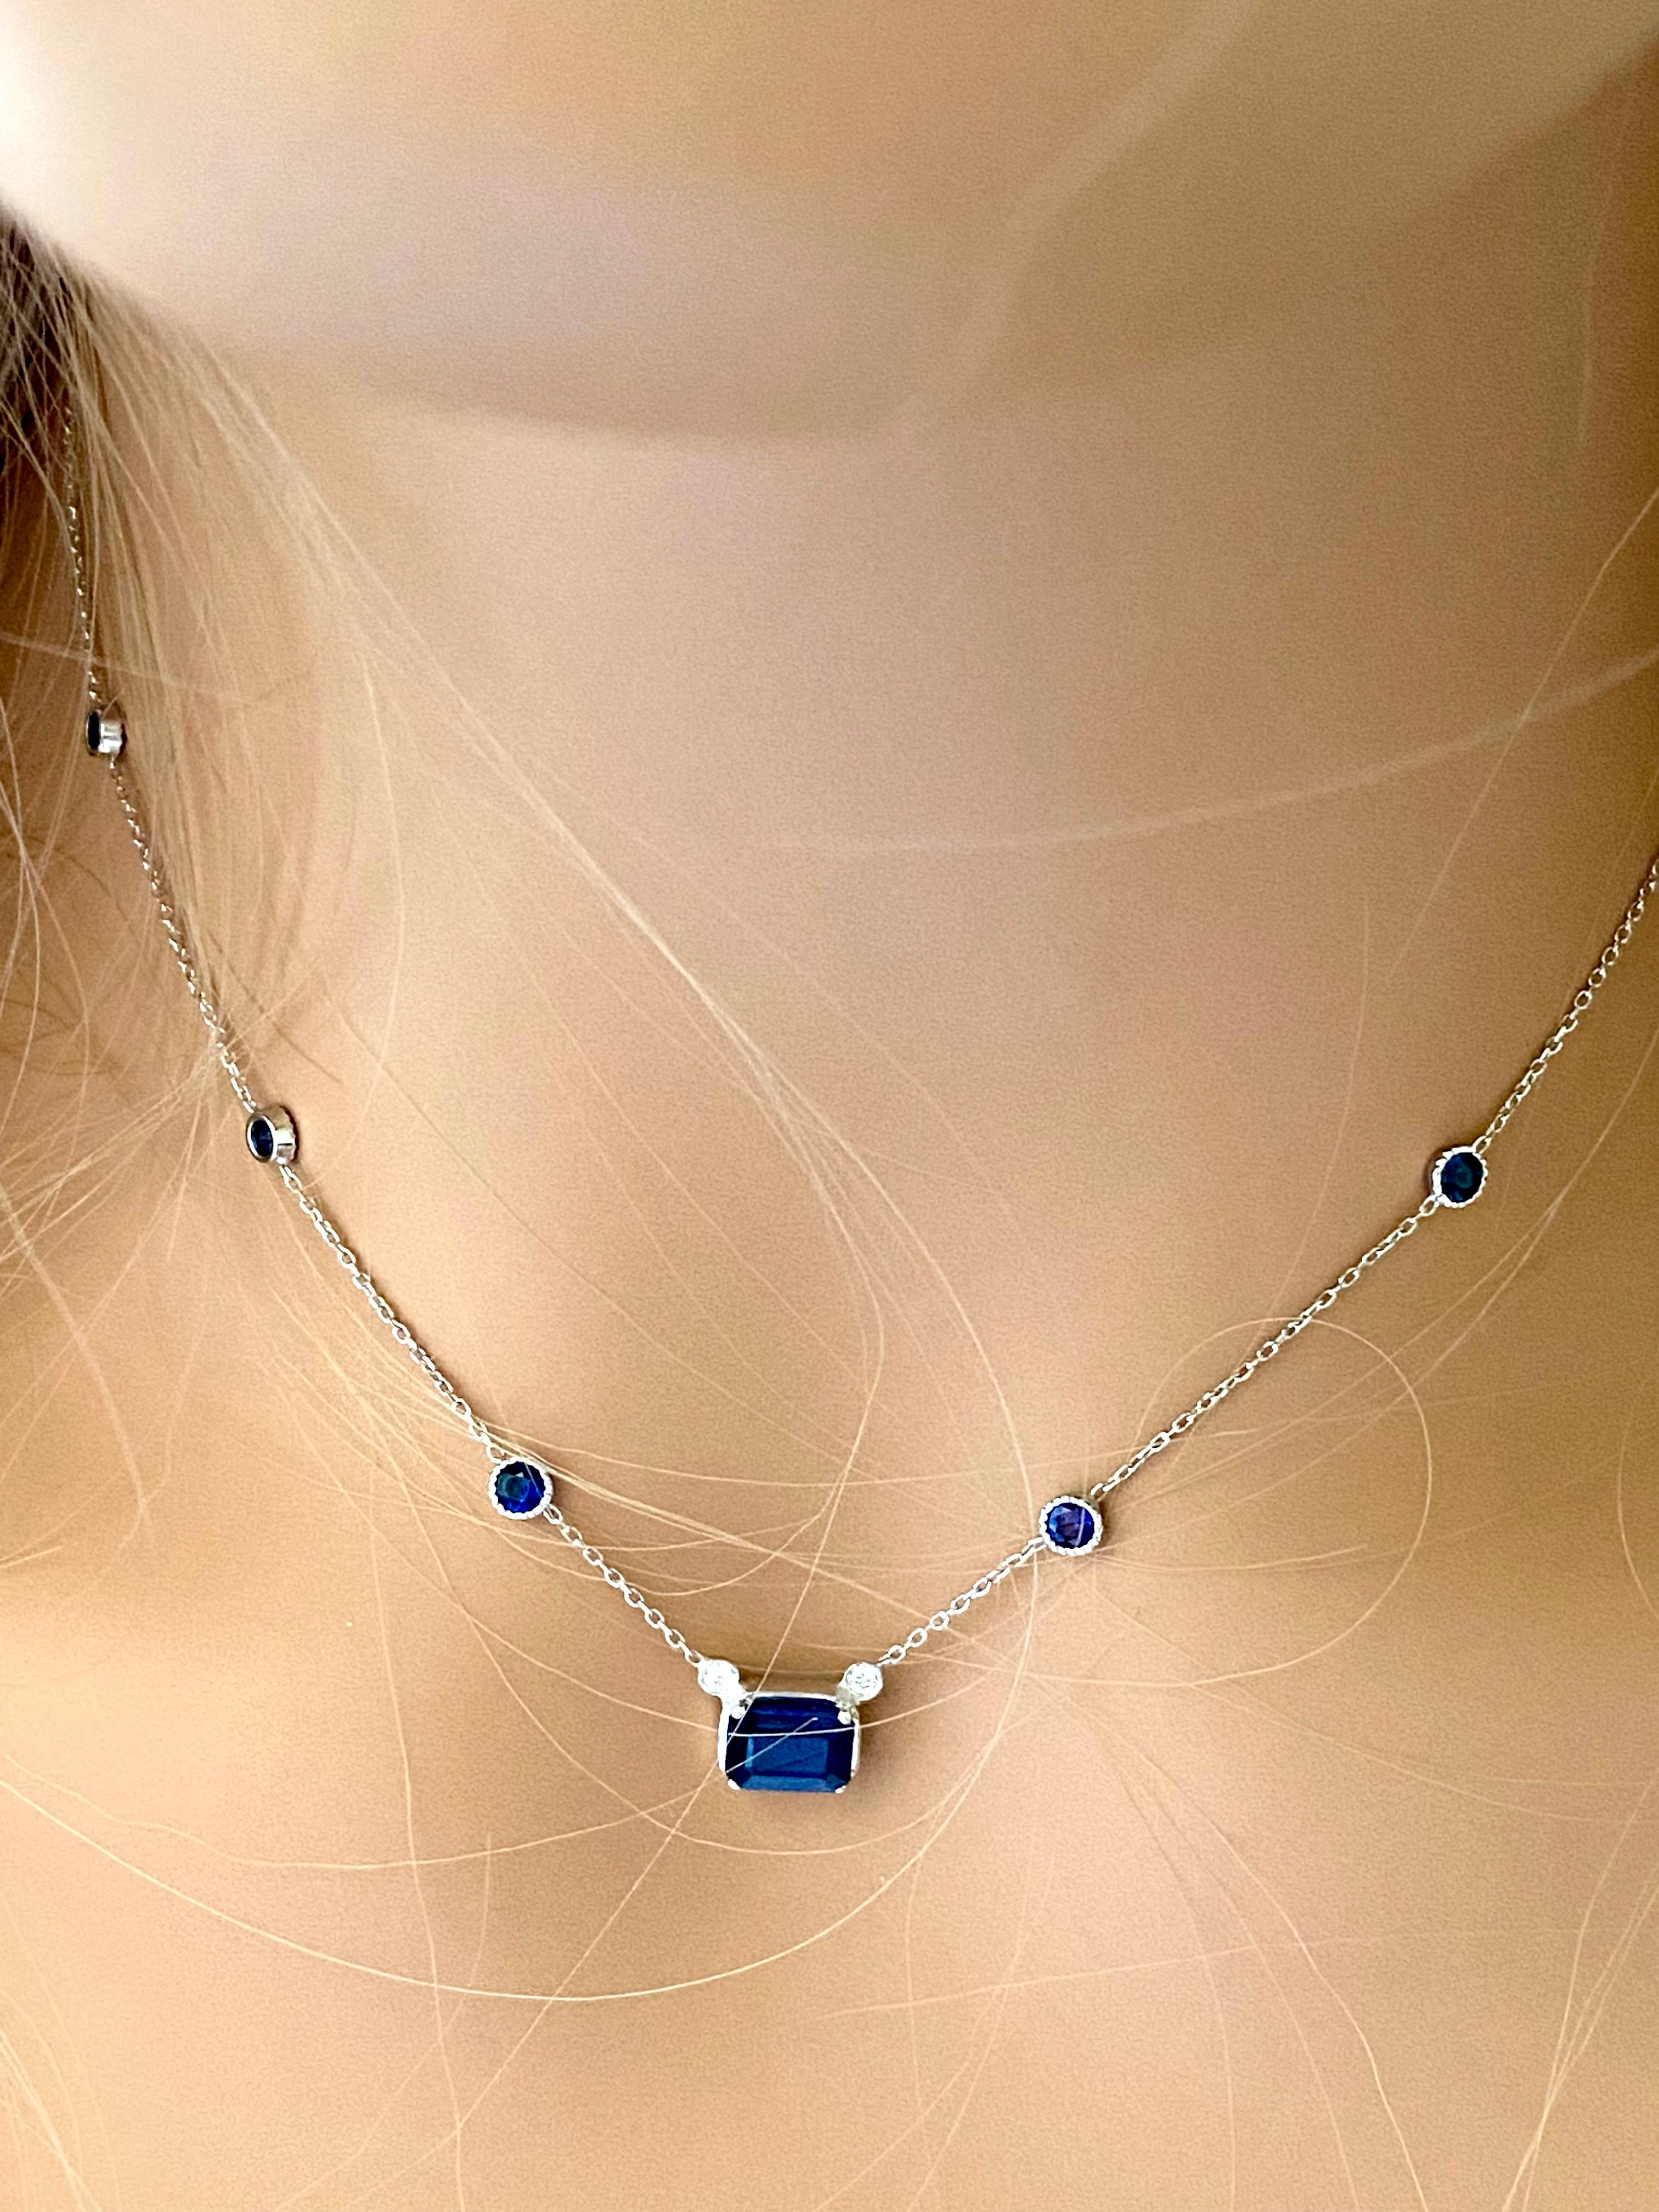 Contemporary White Gold Necklace Pendant Emerald Shaped Sapphire Diamonds Six Bezel Sapphire